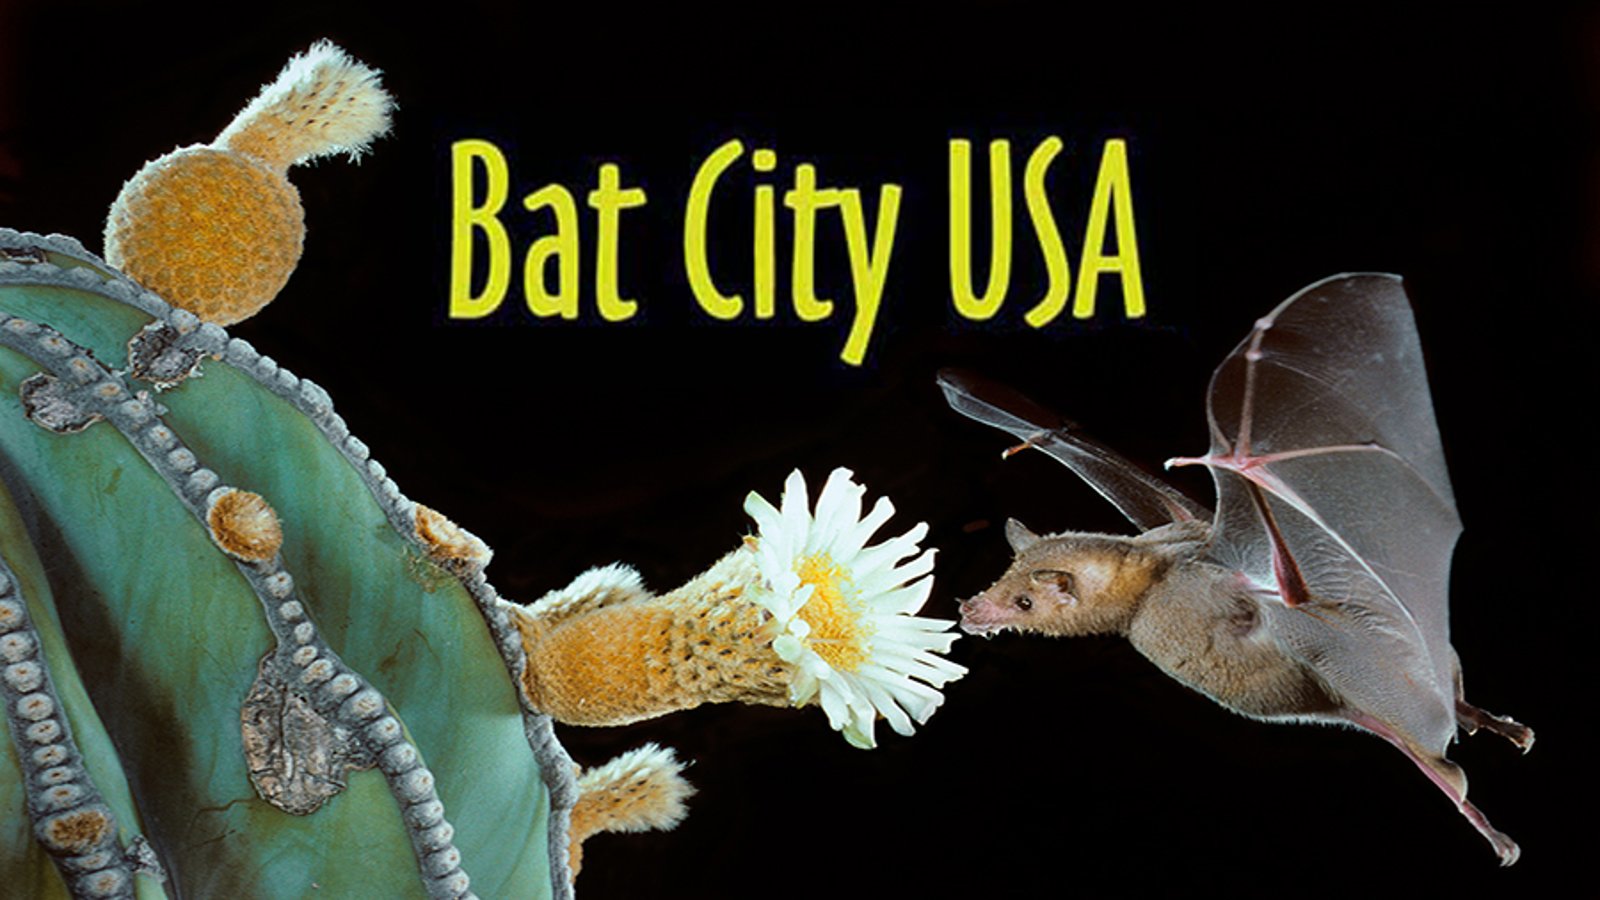 Bat City USA